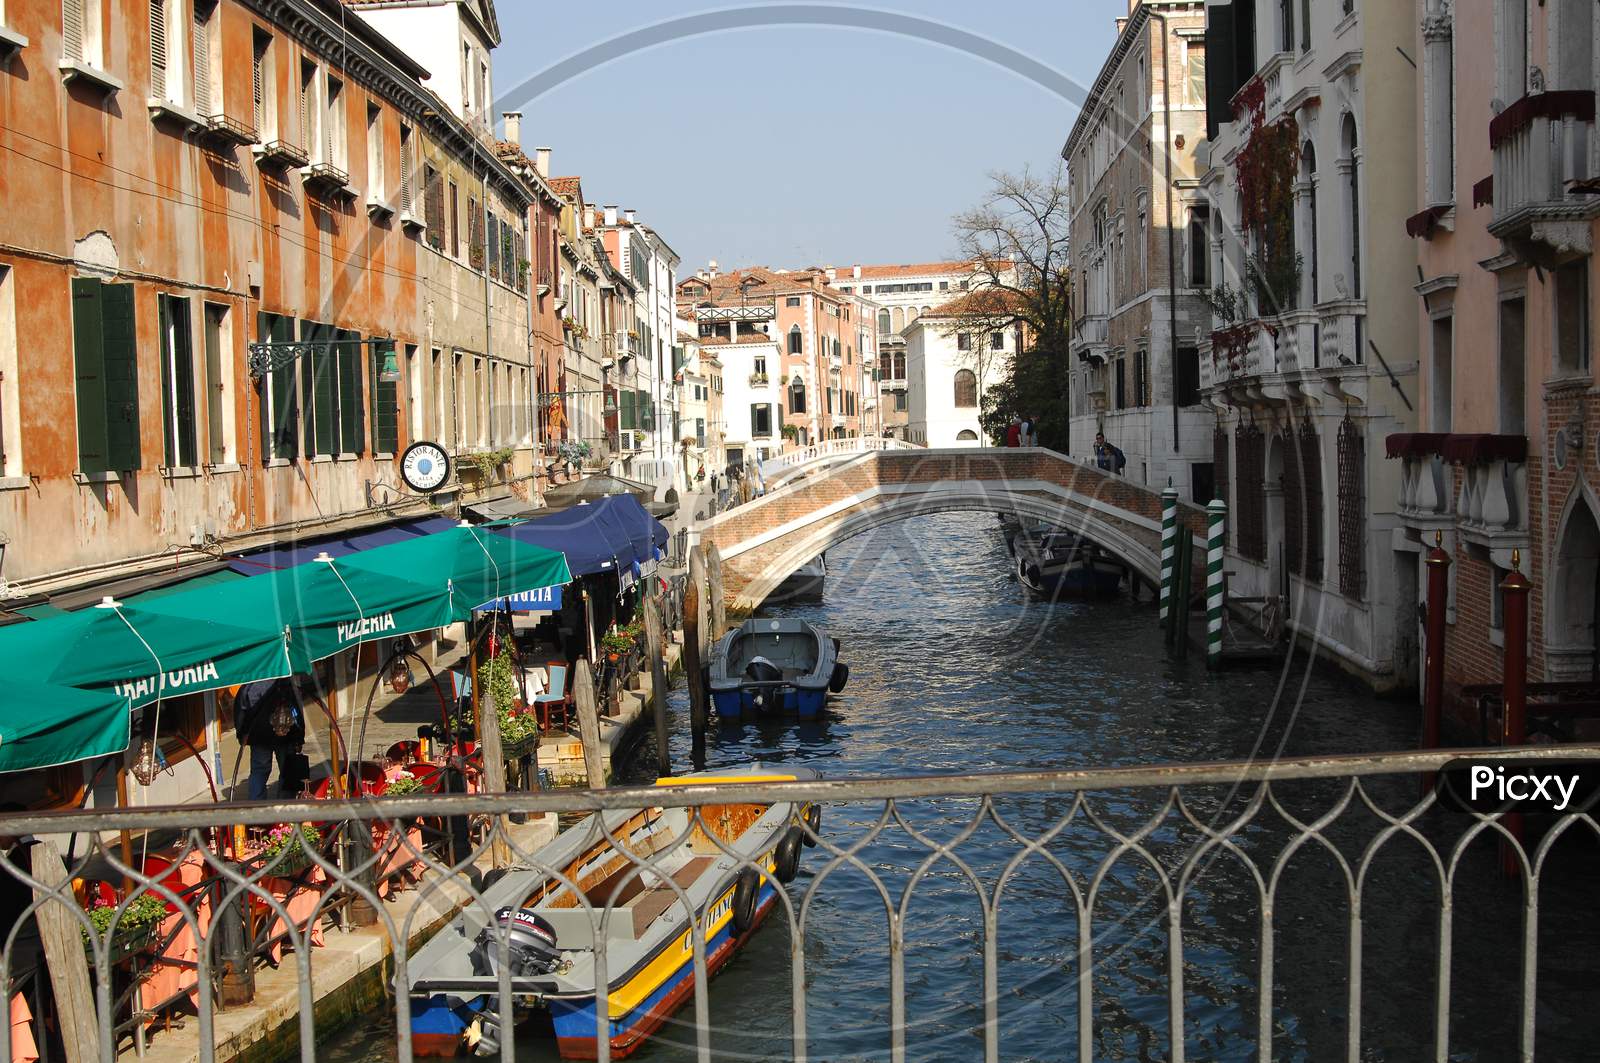 Gondola boats in the grand channel in Venice